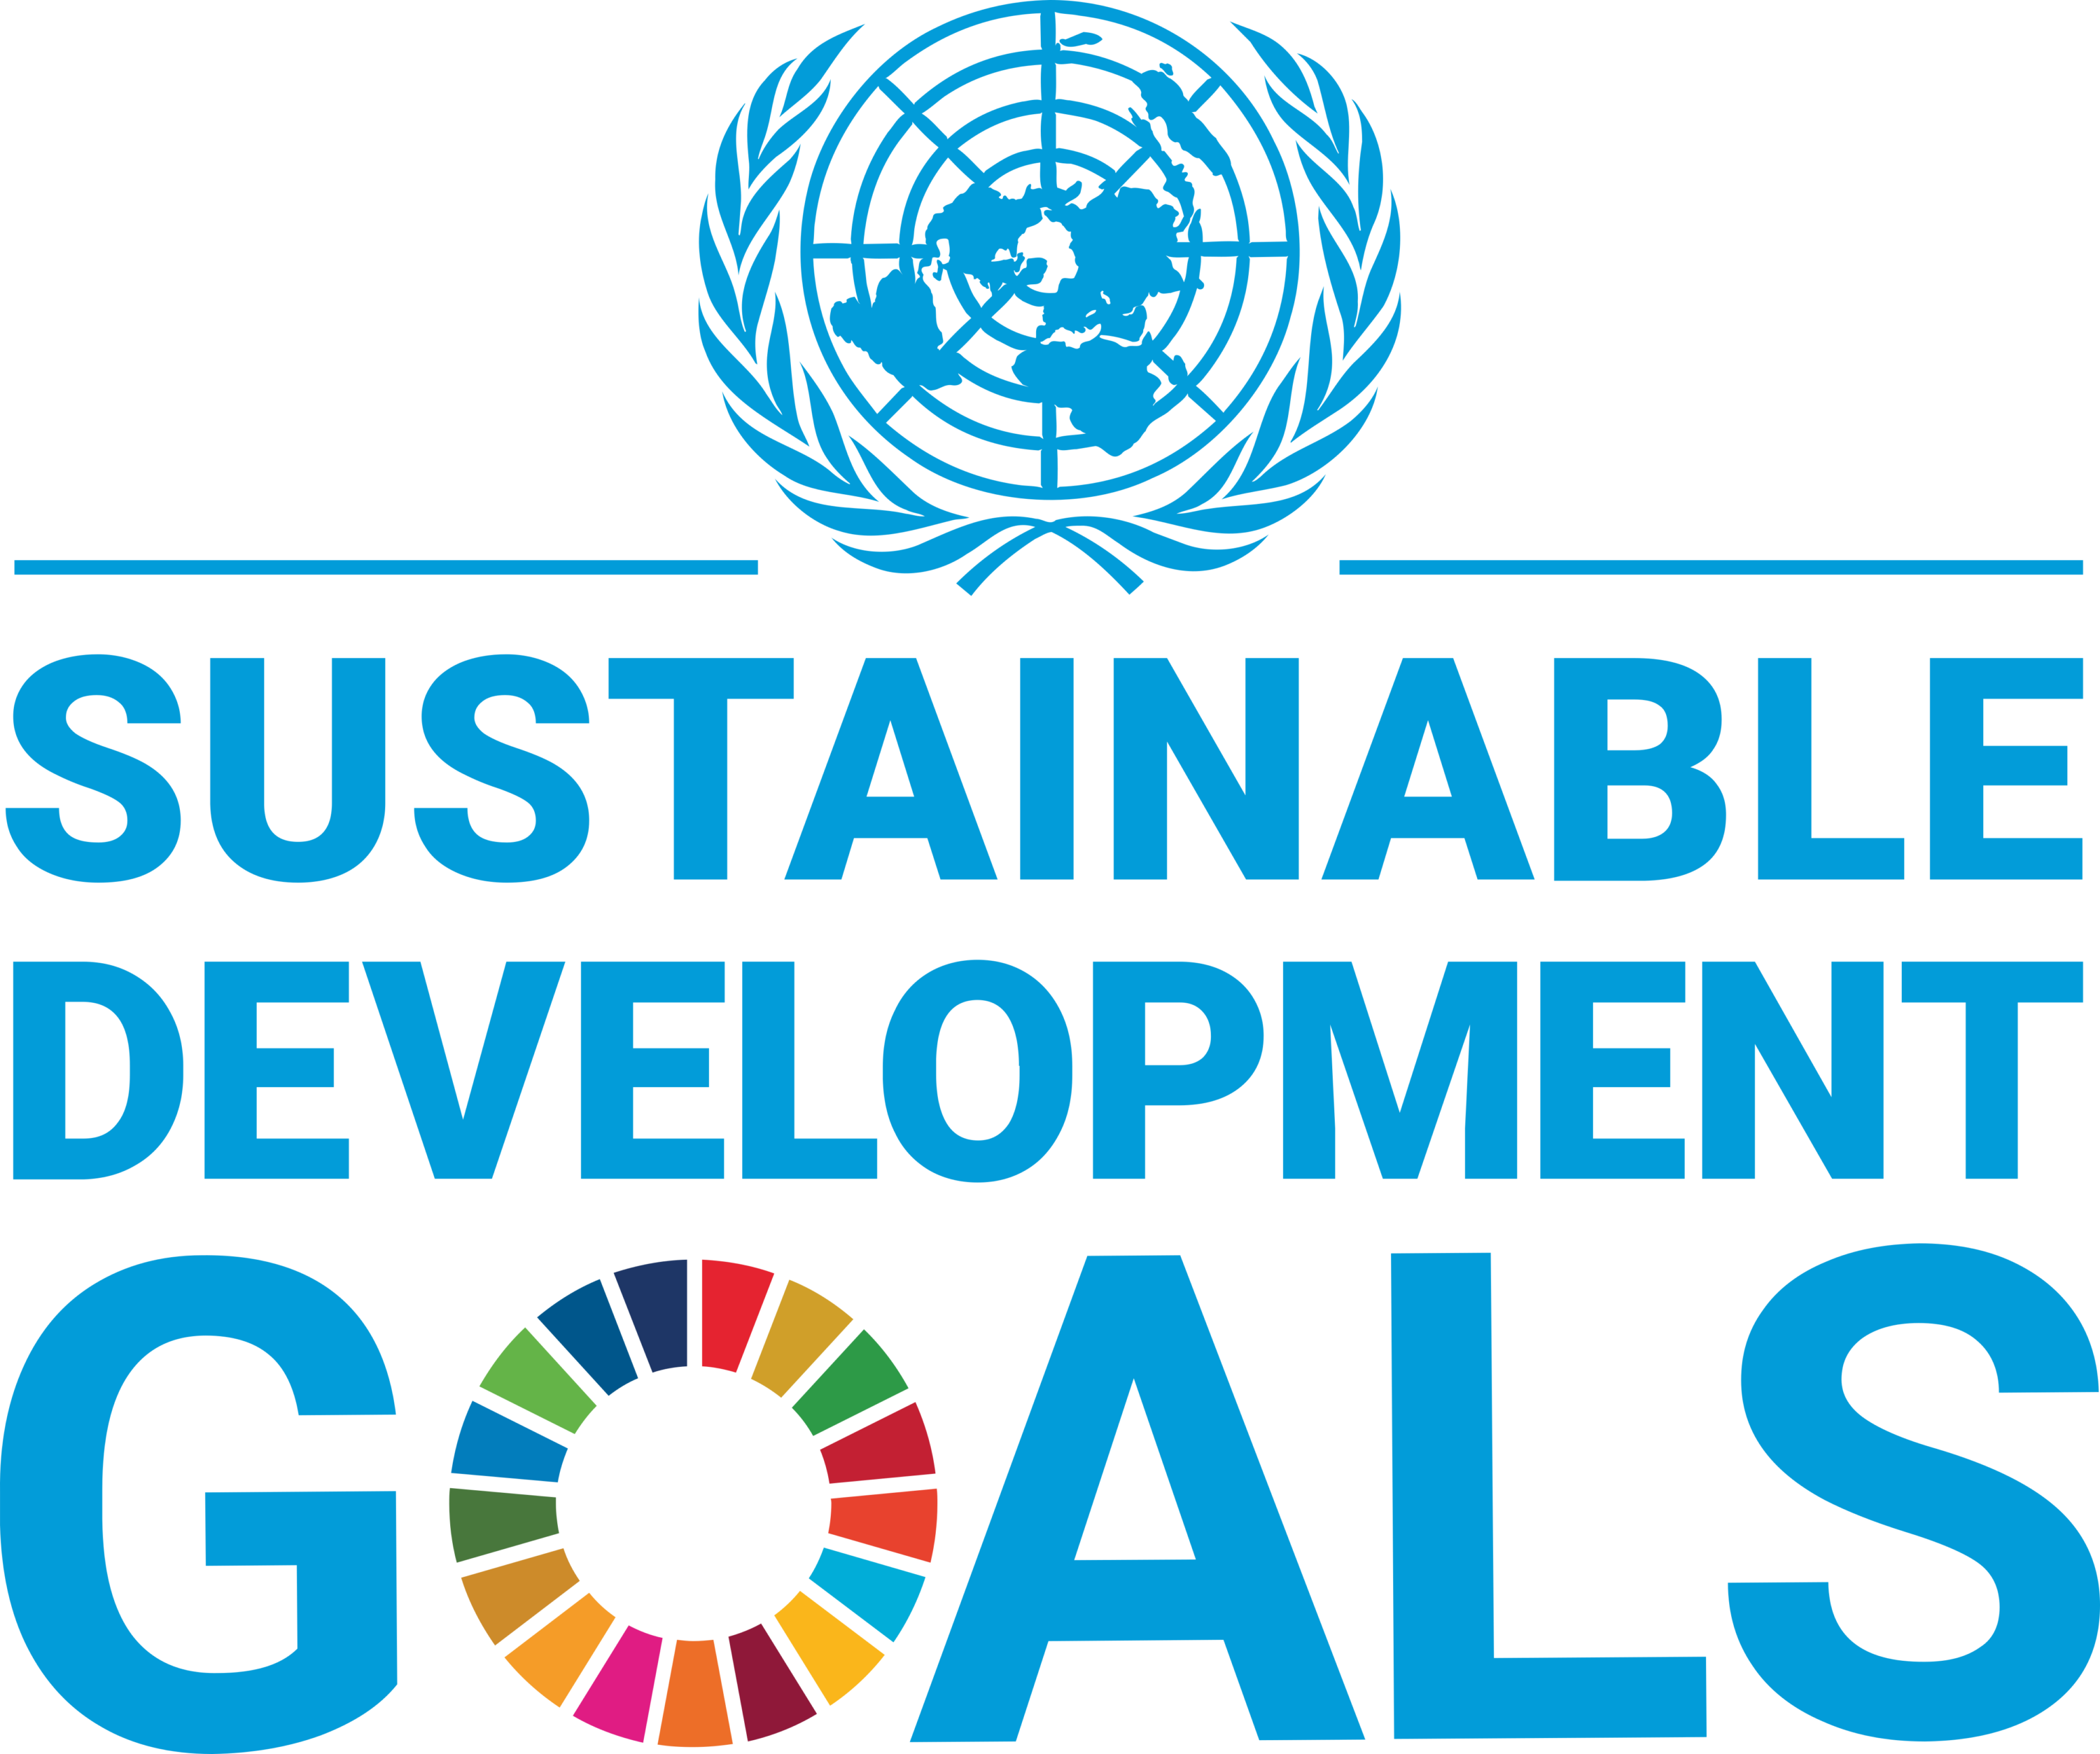 Sustainable Development Goals Logo full